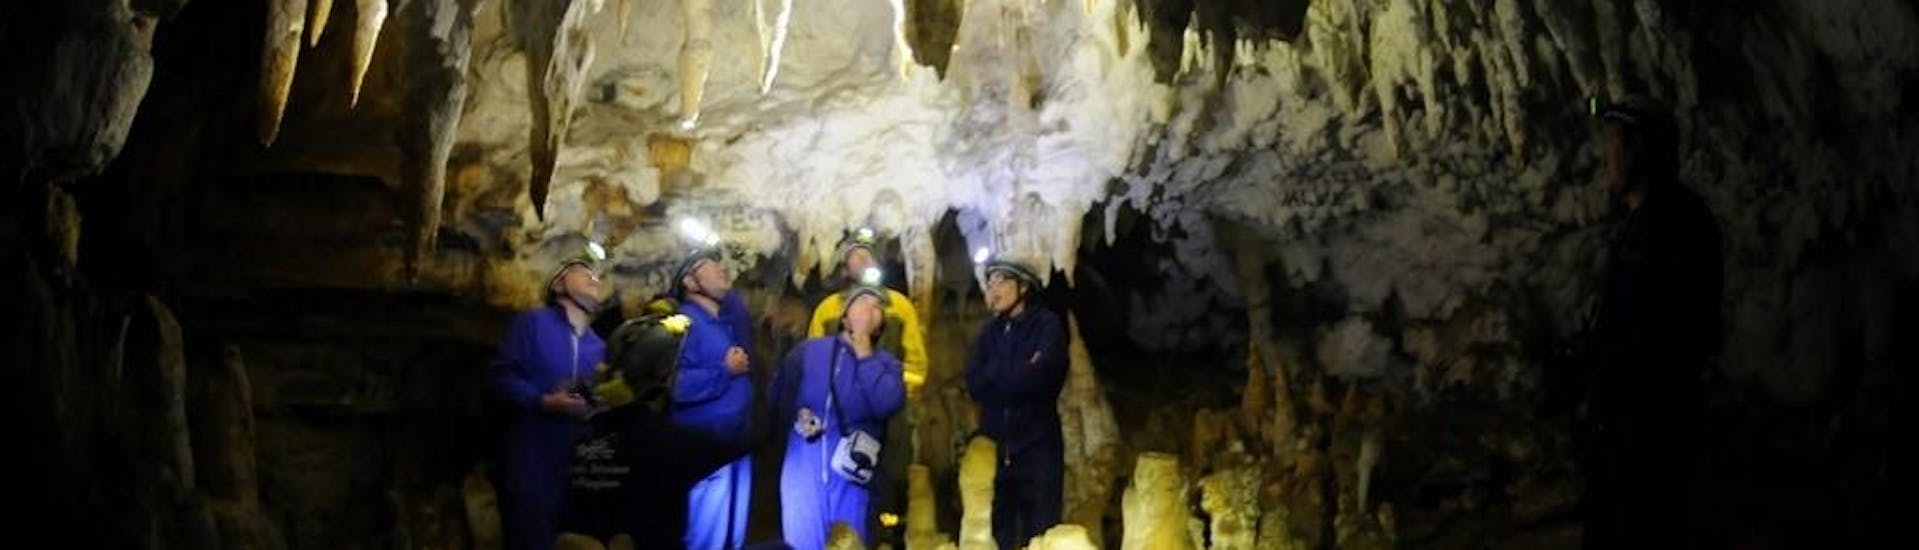 Participants in an activity of speleology in Cueva de Pando provided by Rana Sella Arriondas.